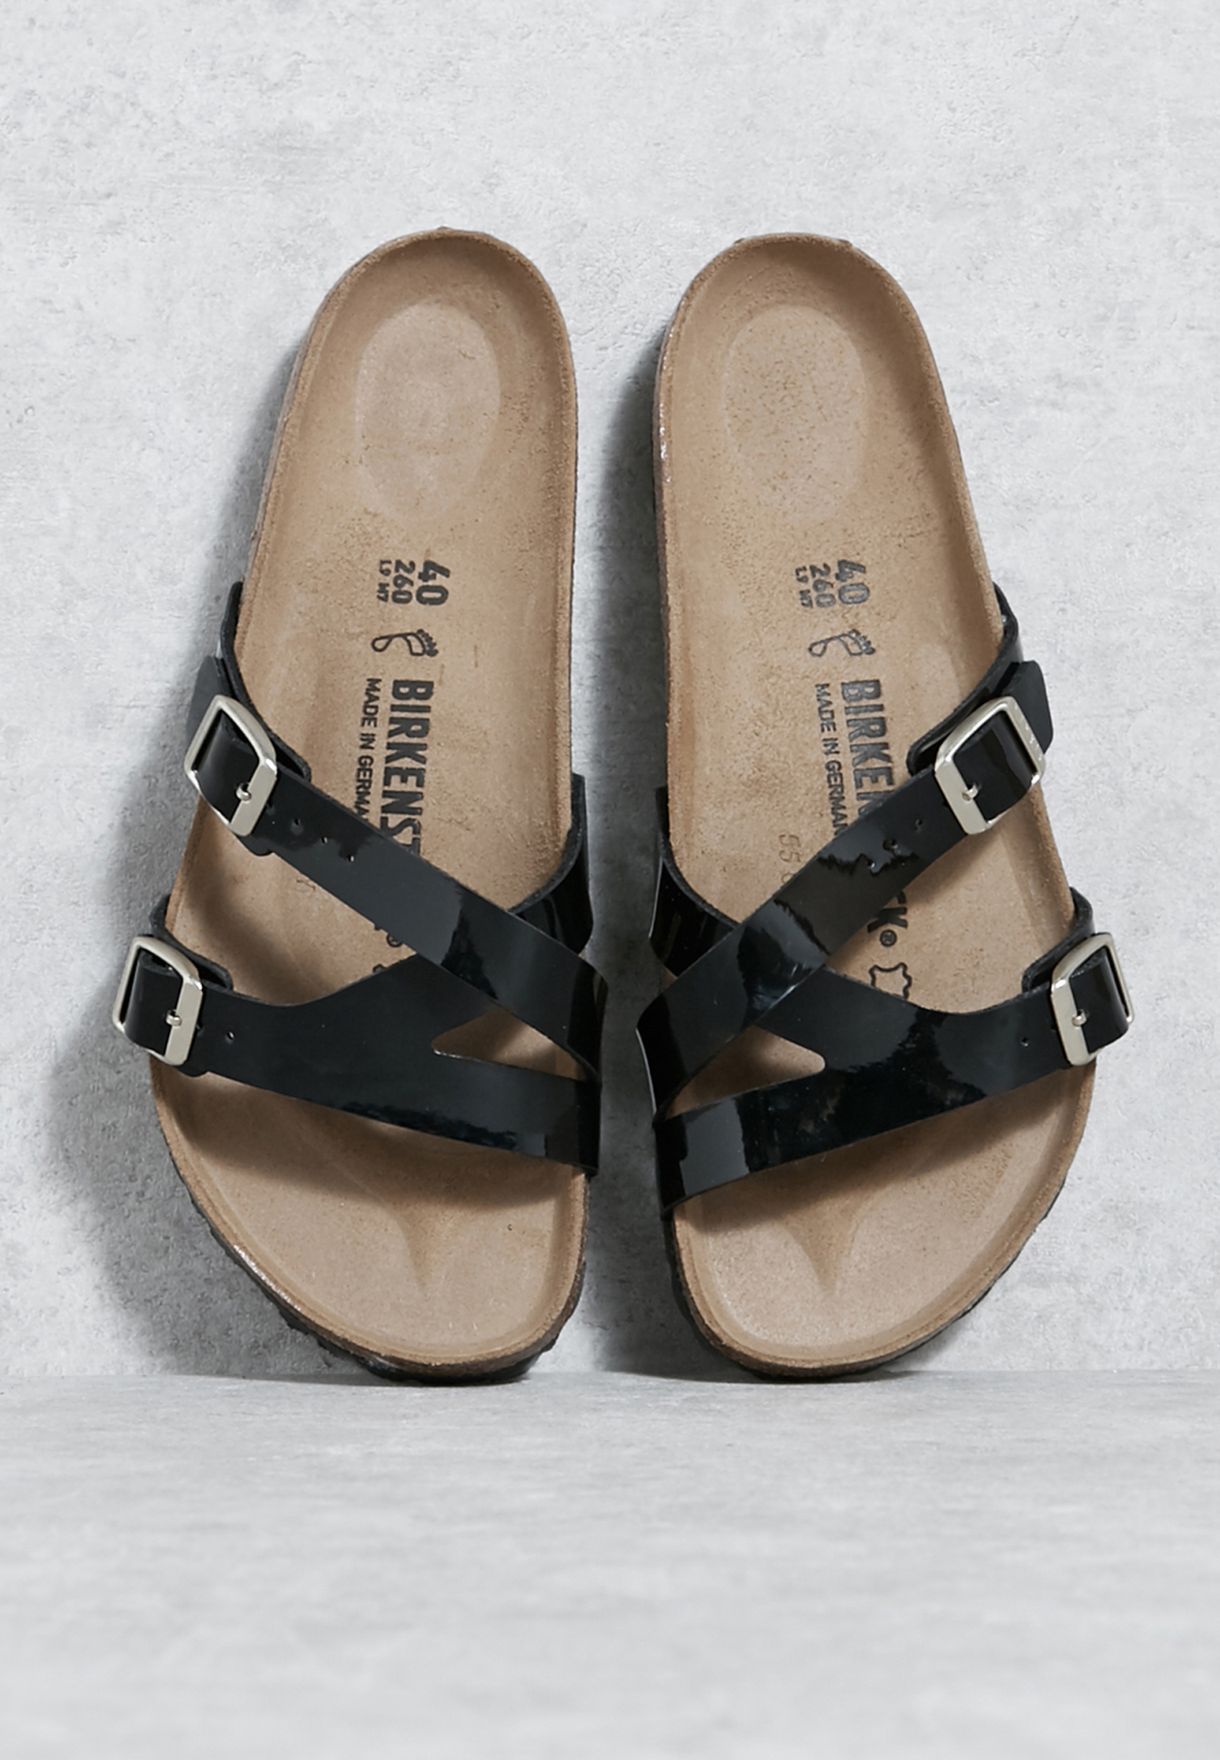 birkenstocks multi strap sandals